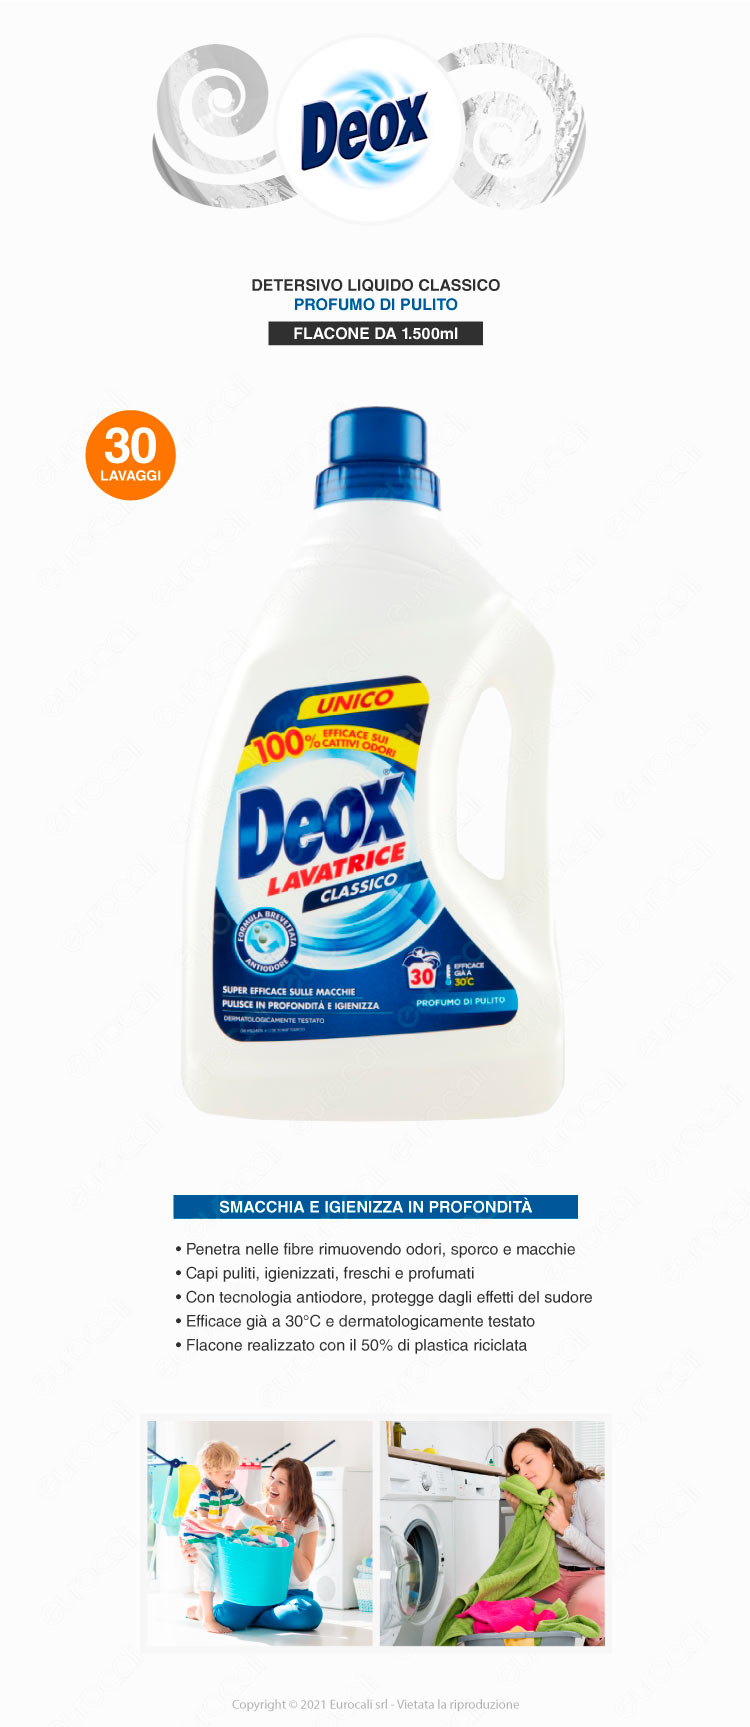 deox detersivo lavatrice classico